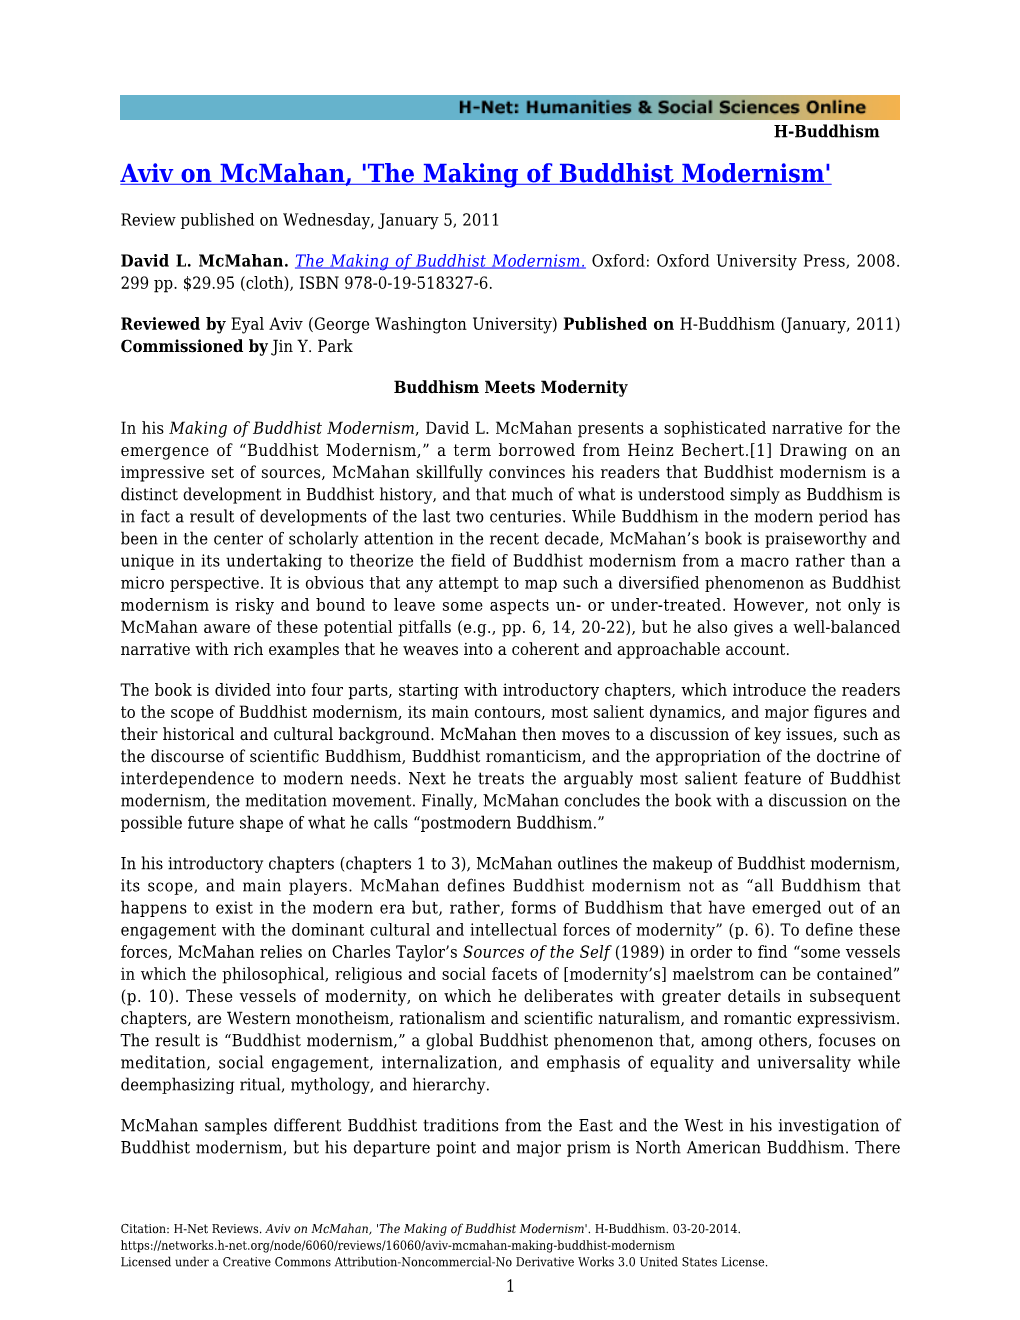 The Making of Buddhist Modernism'